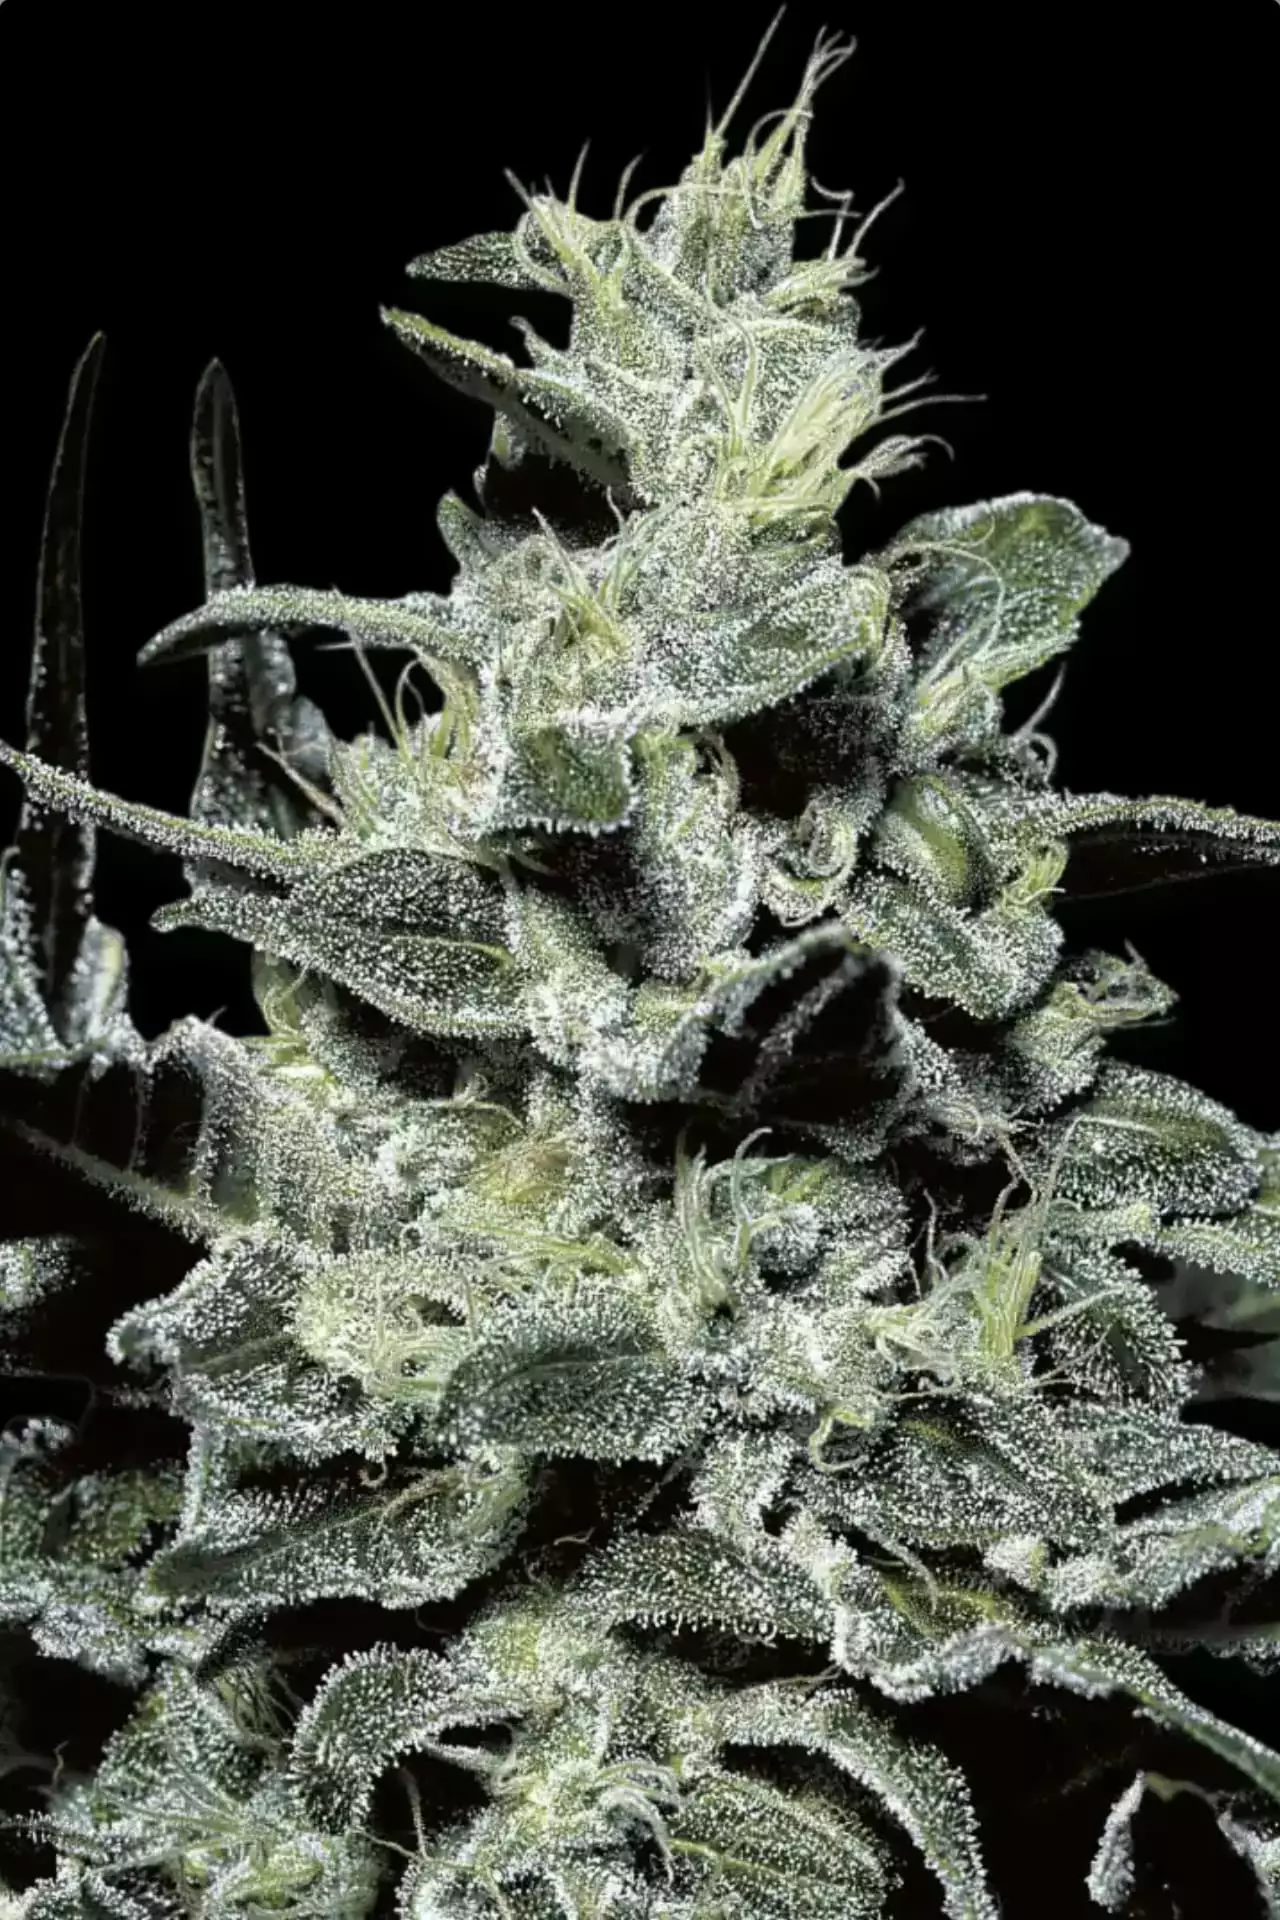 Acid cannabis strain photo with a black background